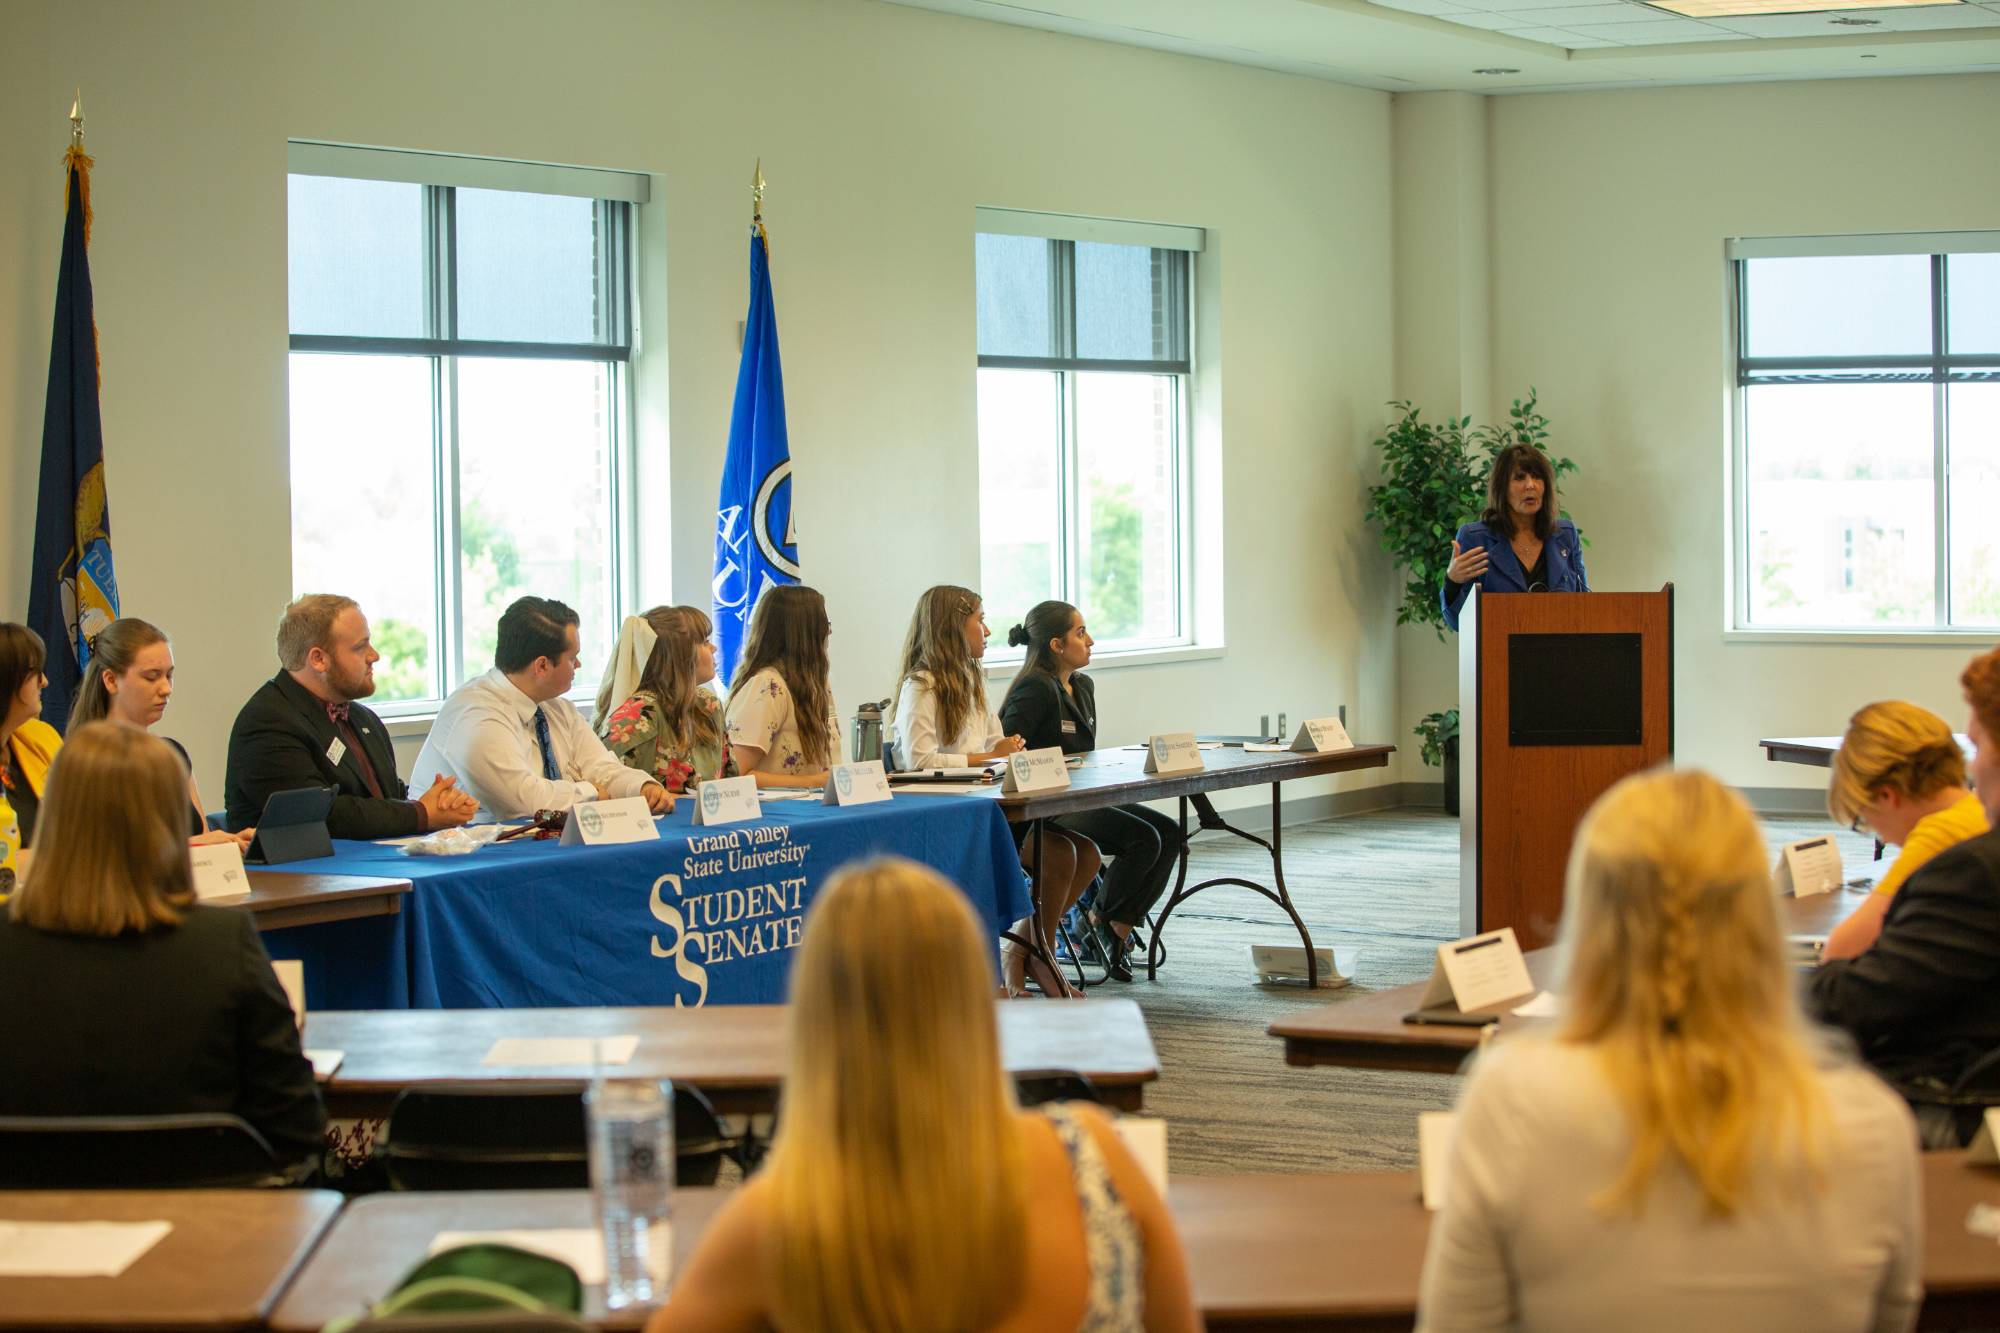 President Mantella speaking at a GVSU Student Senate meeting